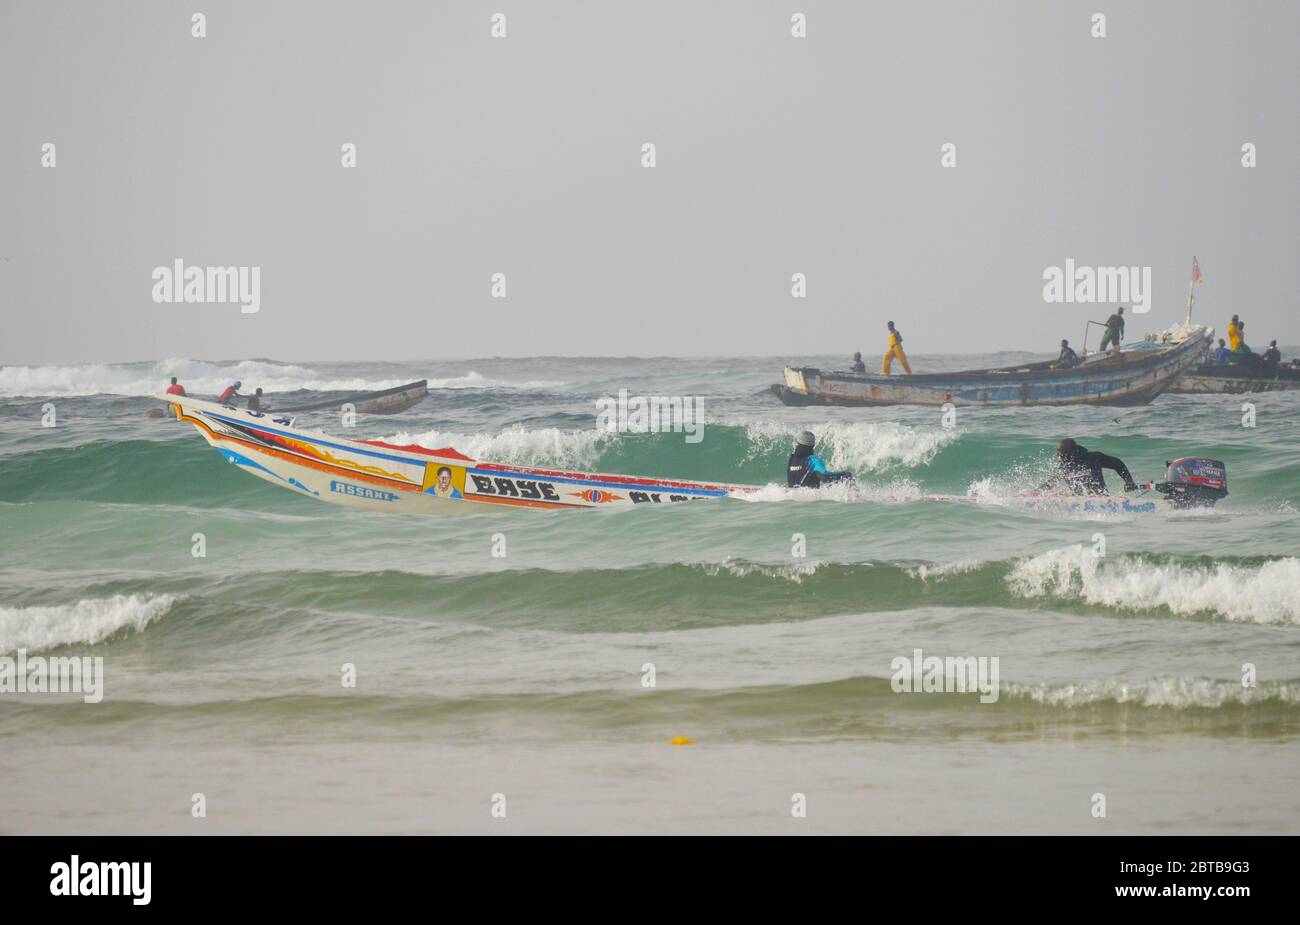 A pirogue (artisanal fishing boat) braving the surf at Yoff beach, Dakar, Senegal Stock Photo